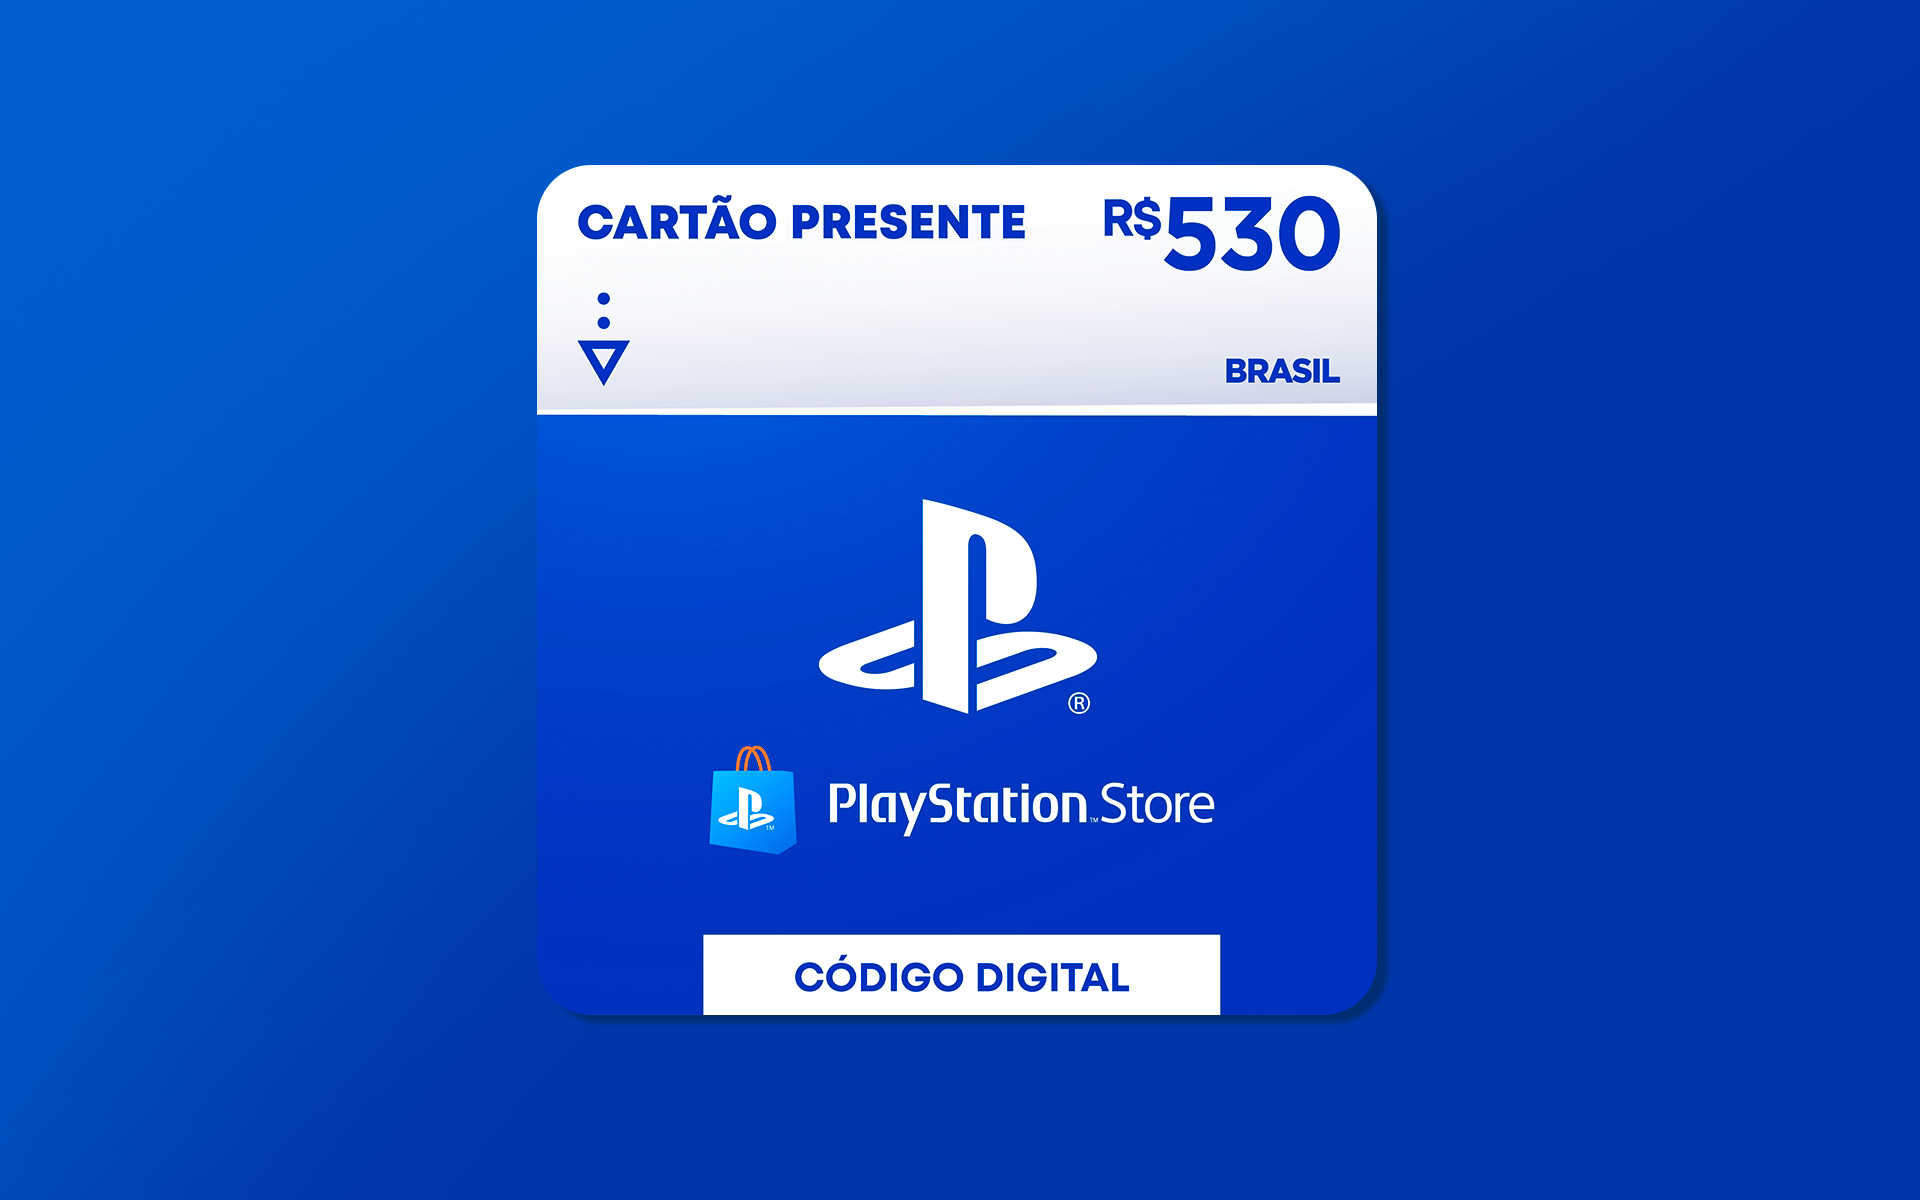 R$530 PlayStation Store - Cartão Presente Digital [Exclusivo Brasil]